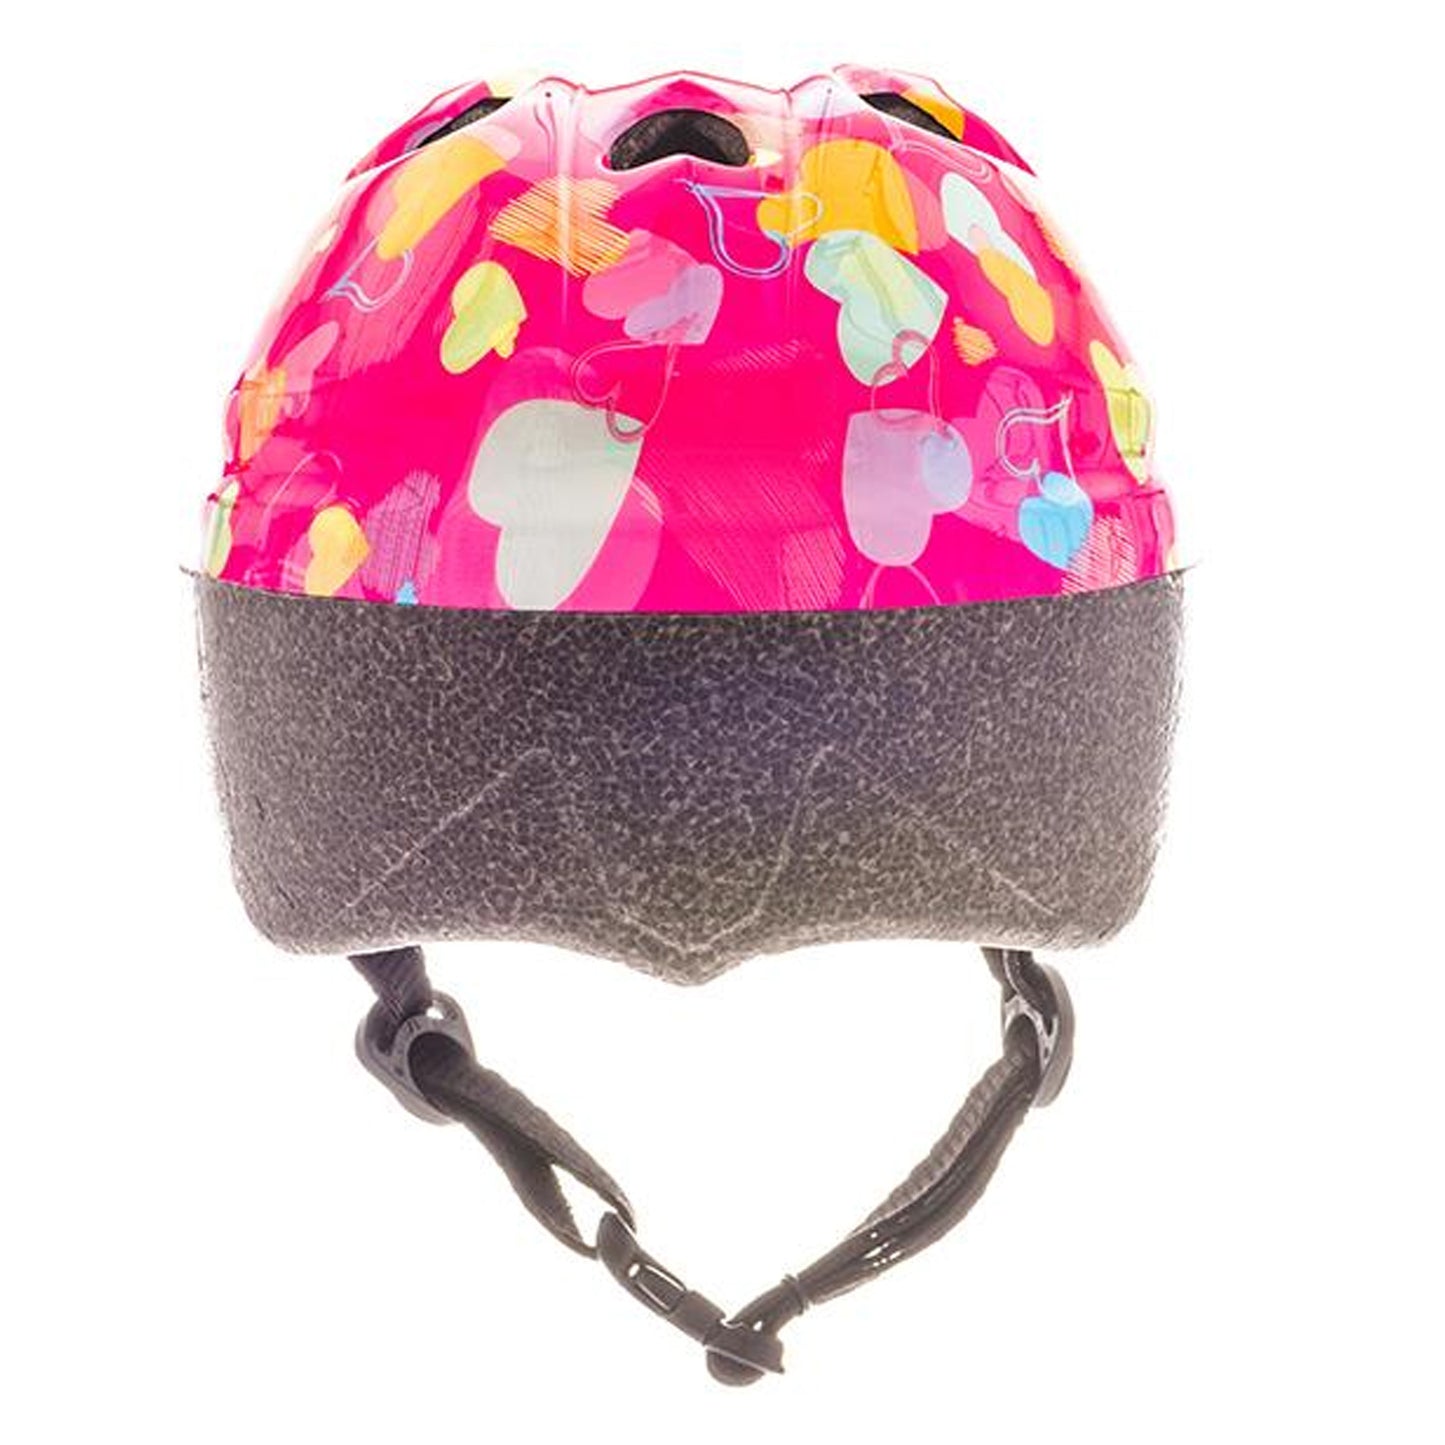 RSP Rascal Hearts 44-50cm Pink Kid's Cycling Helmet Alternate 2